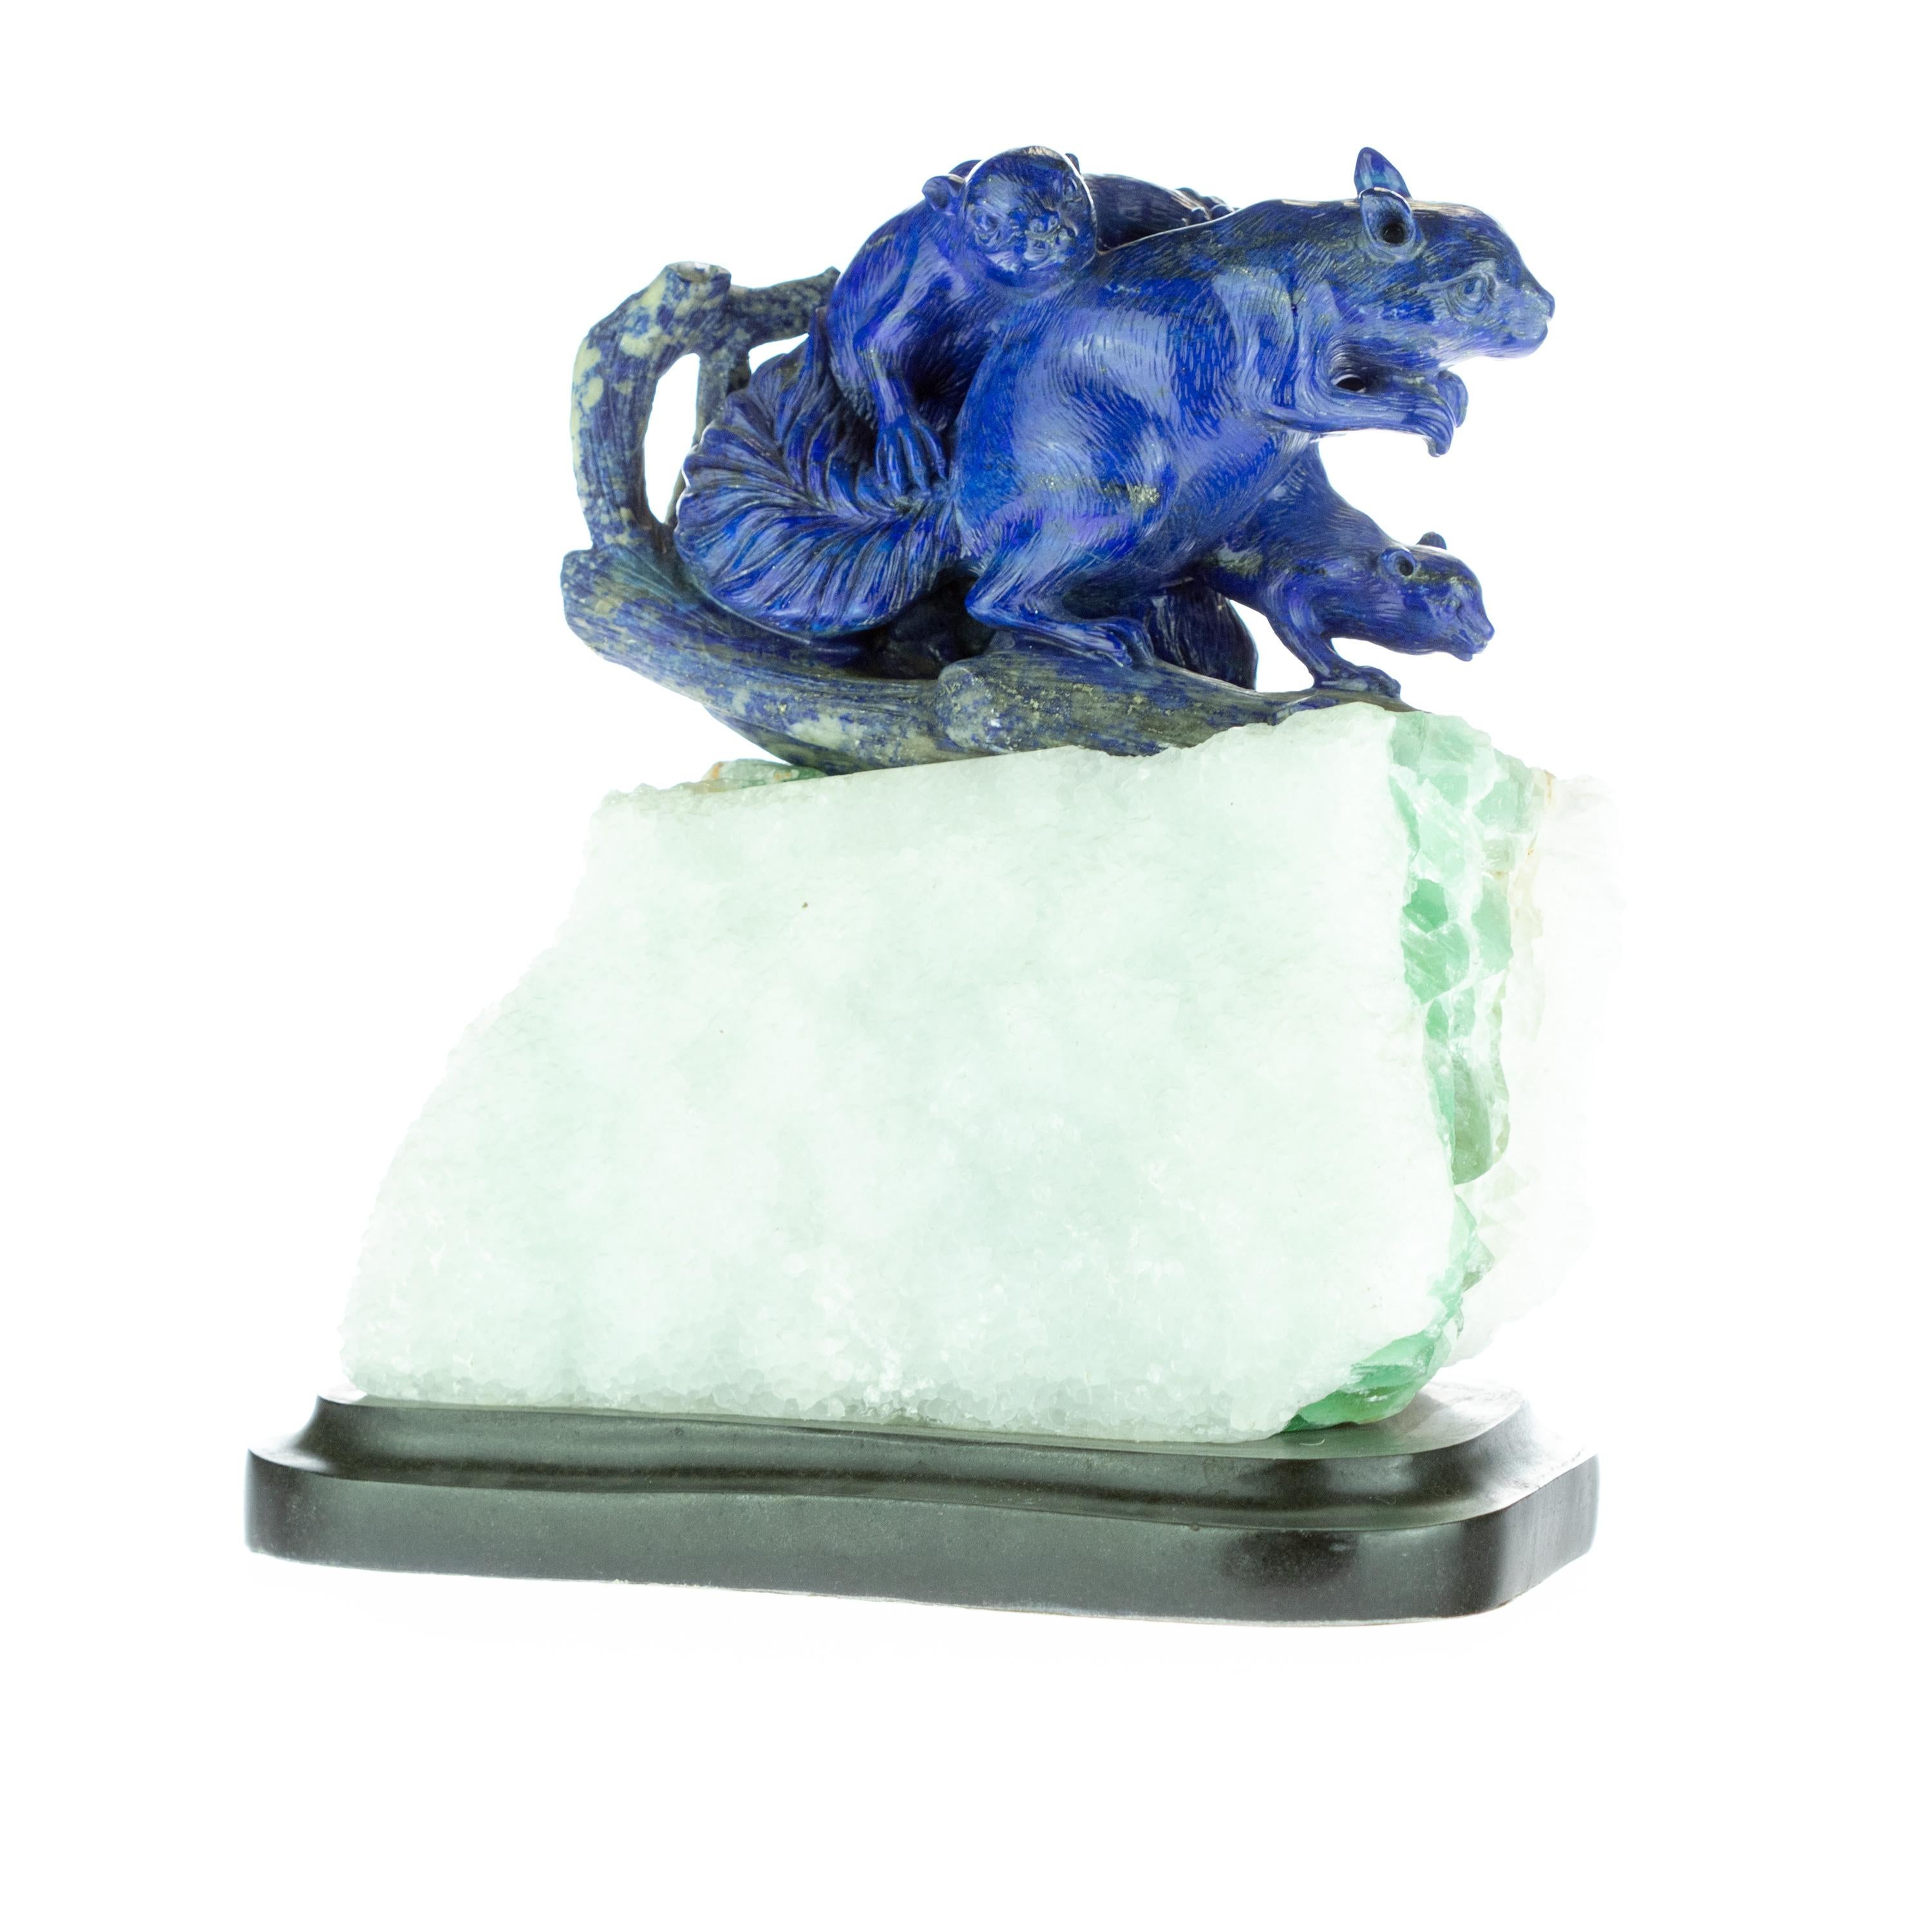 Chinese Export Lapis Lazuli Blue Squirrel Carved Animal Gemstone Artisanal Statue Sculpture